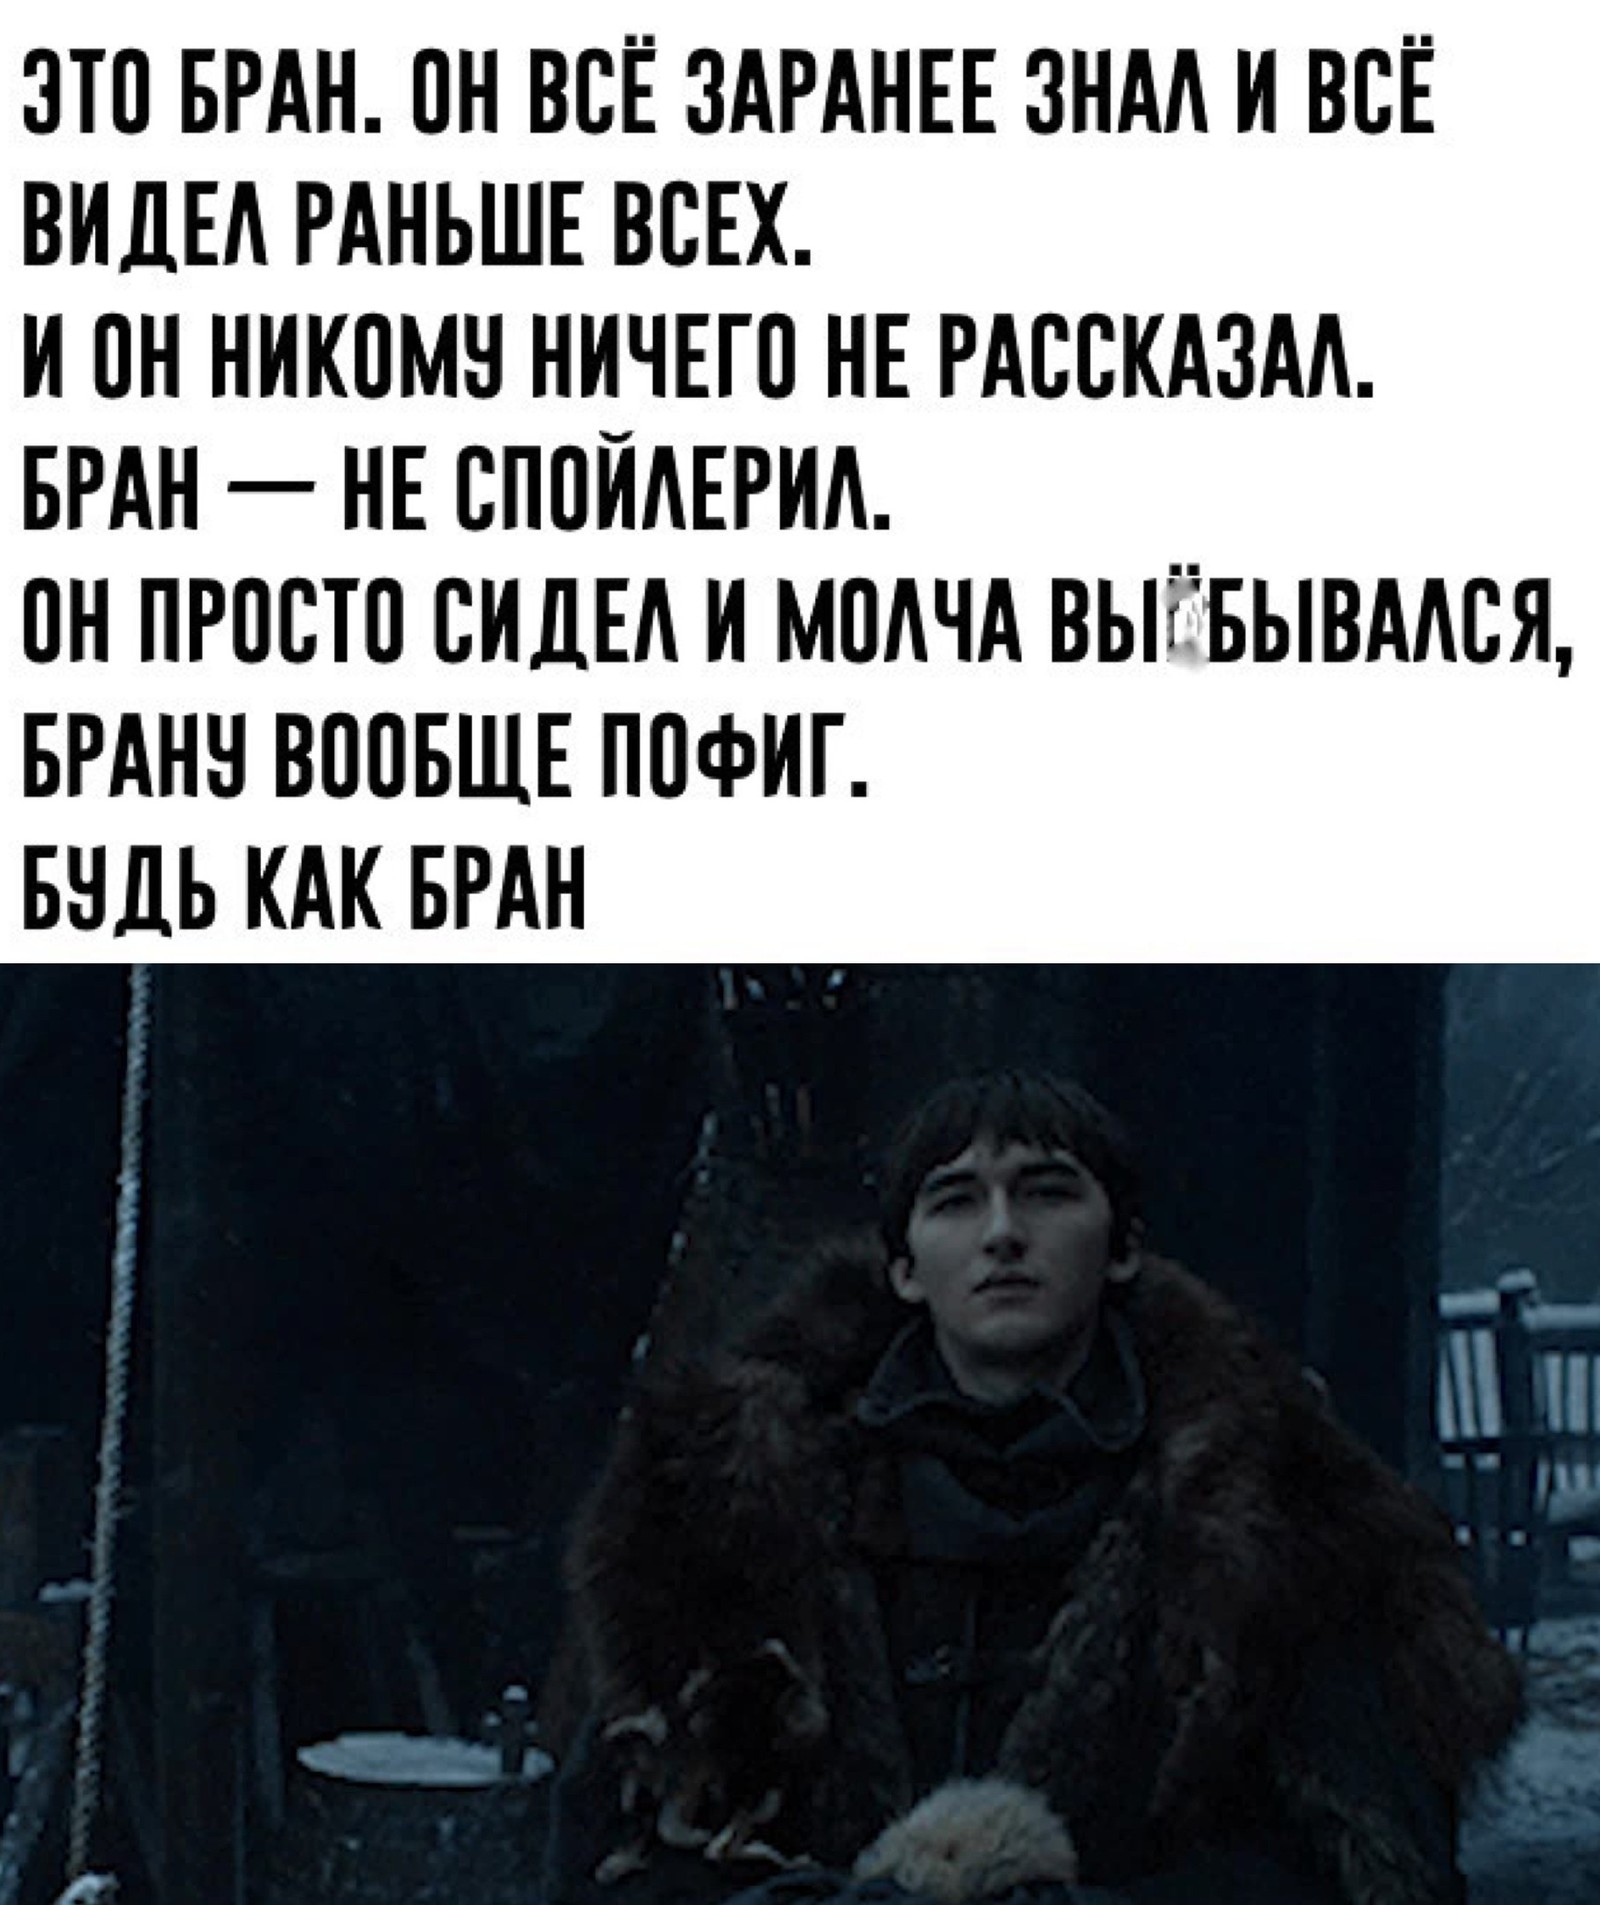 Be like Bran - Game of Thrones, Spoiler